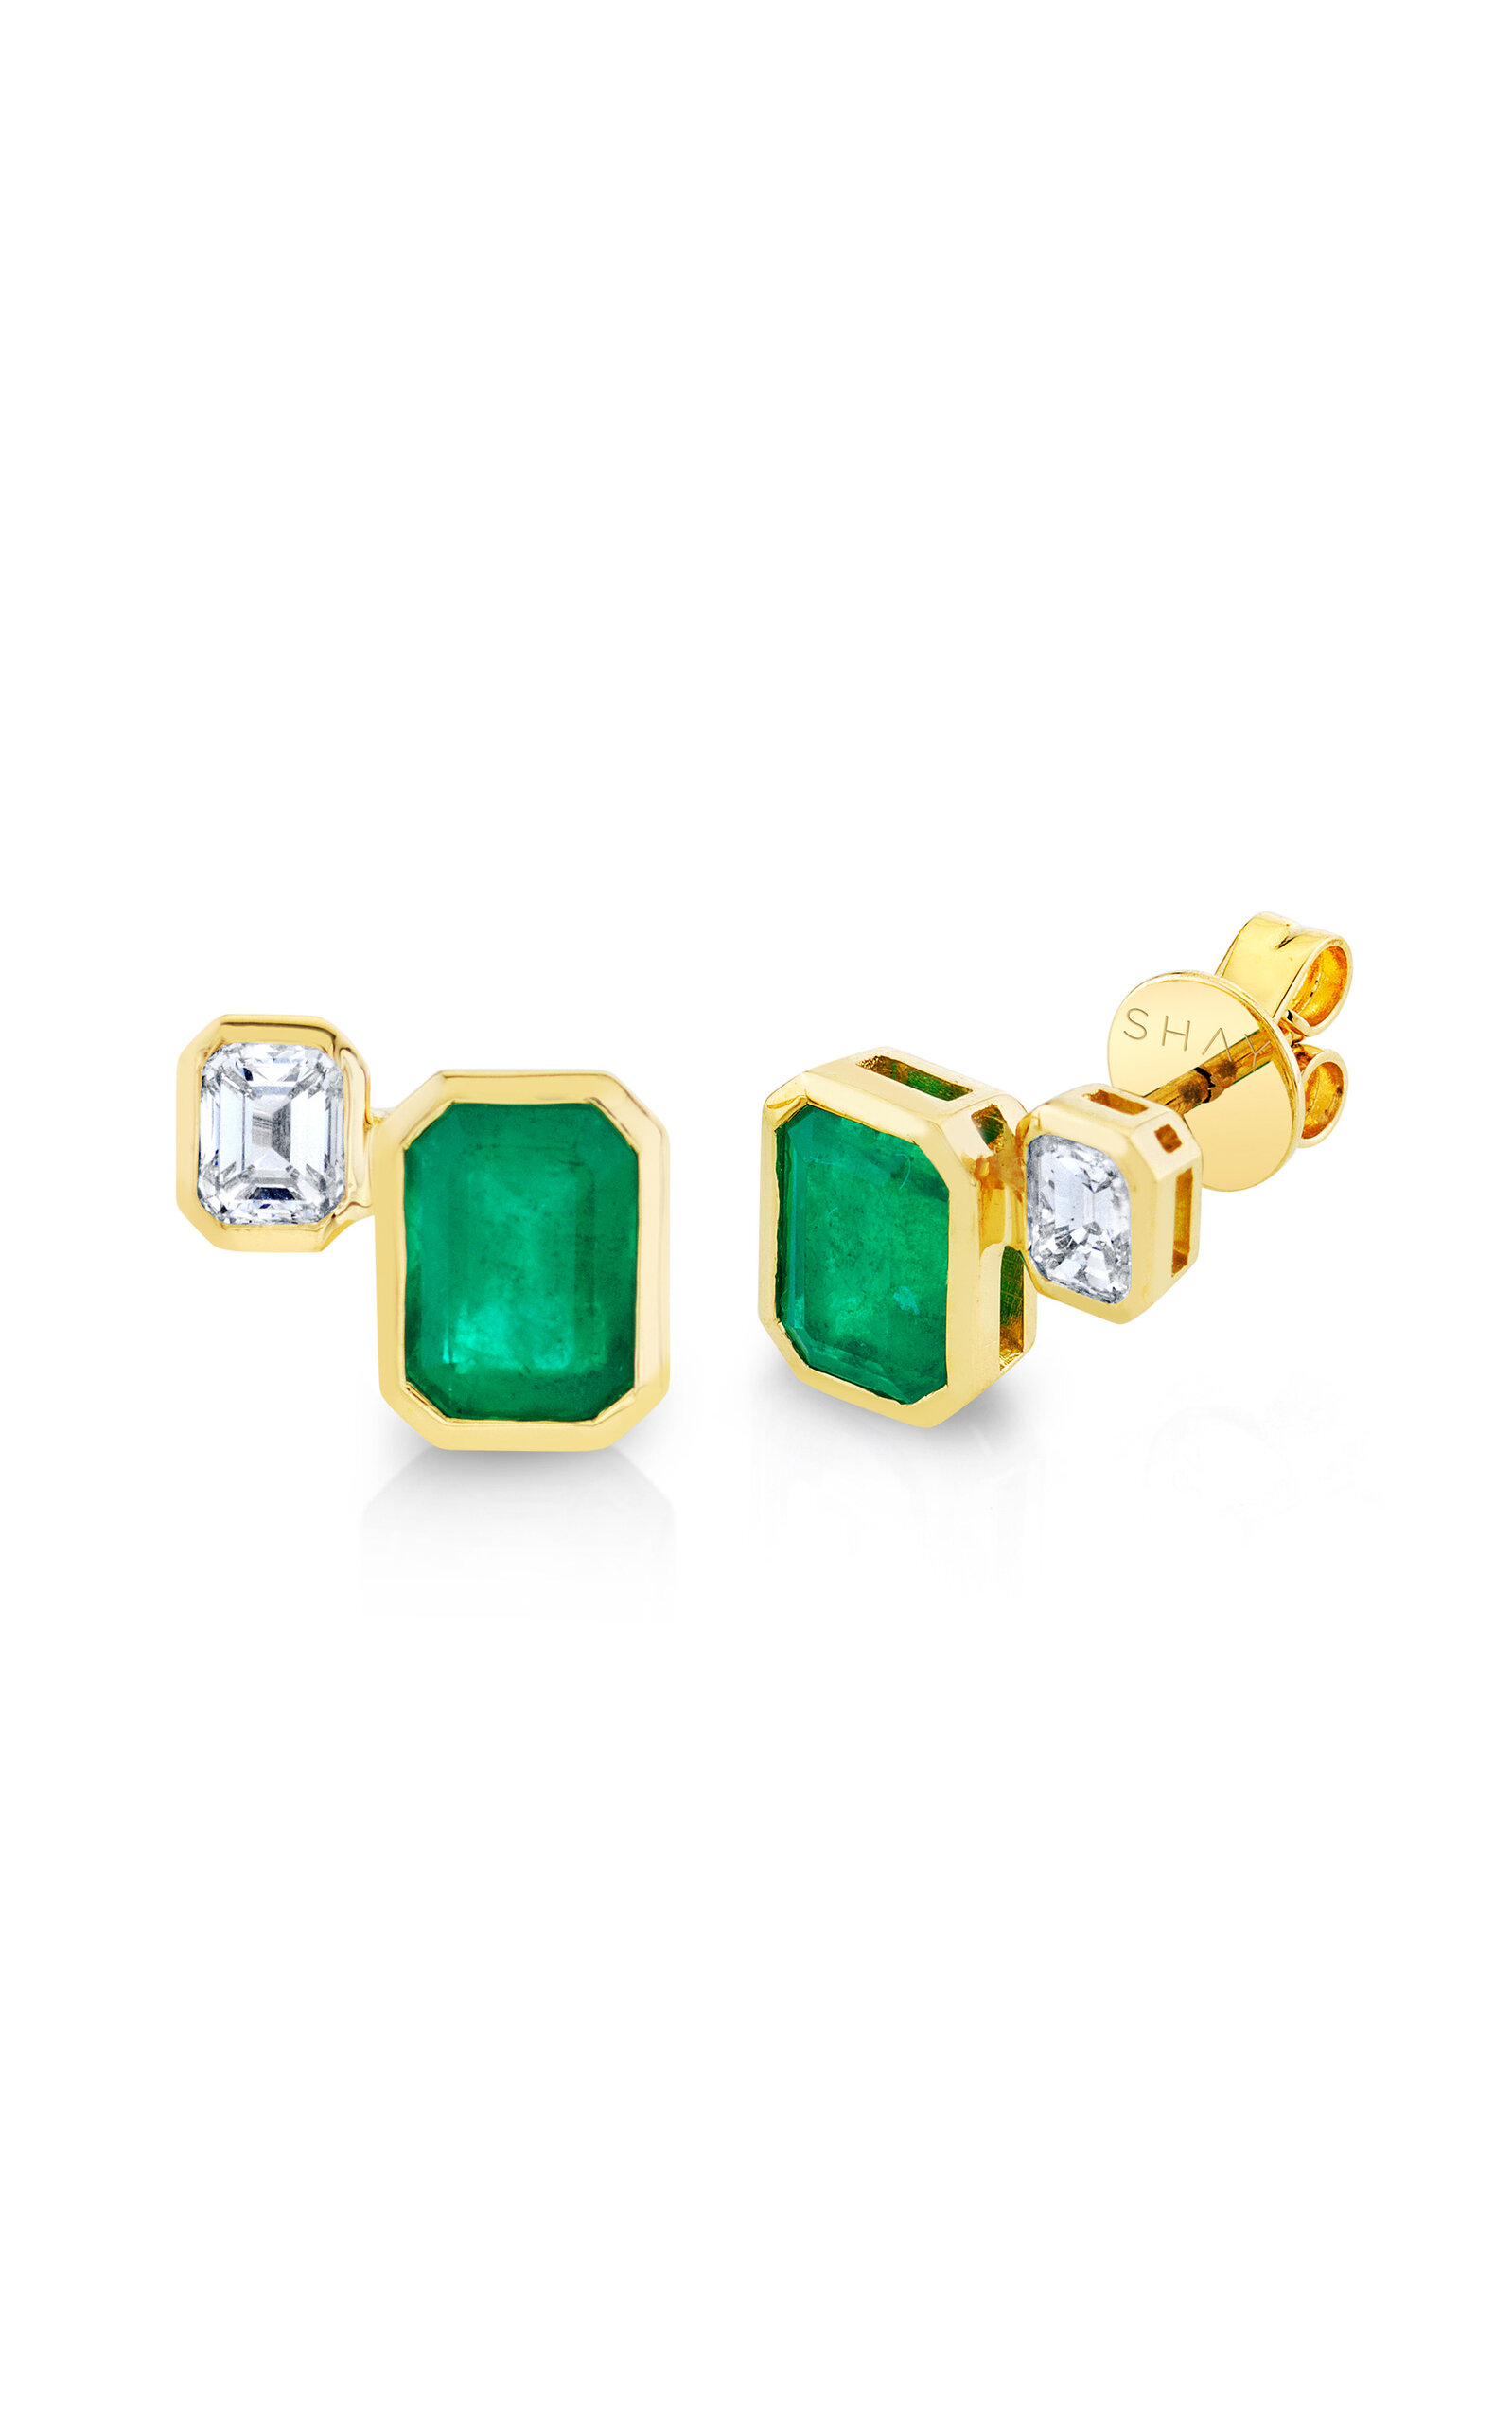 SHAY - The Shay 18K Yellow Gold Emerald; Diamond Earrings - Green - OS - Moda Operandi - Gifts For Her